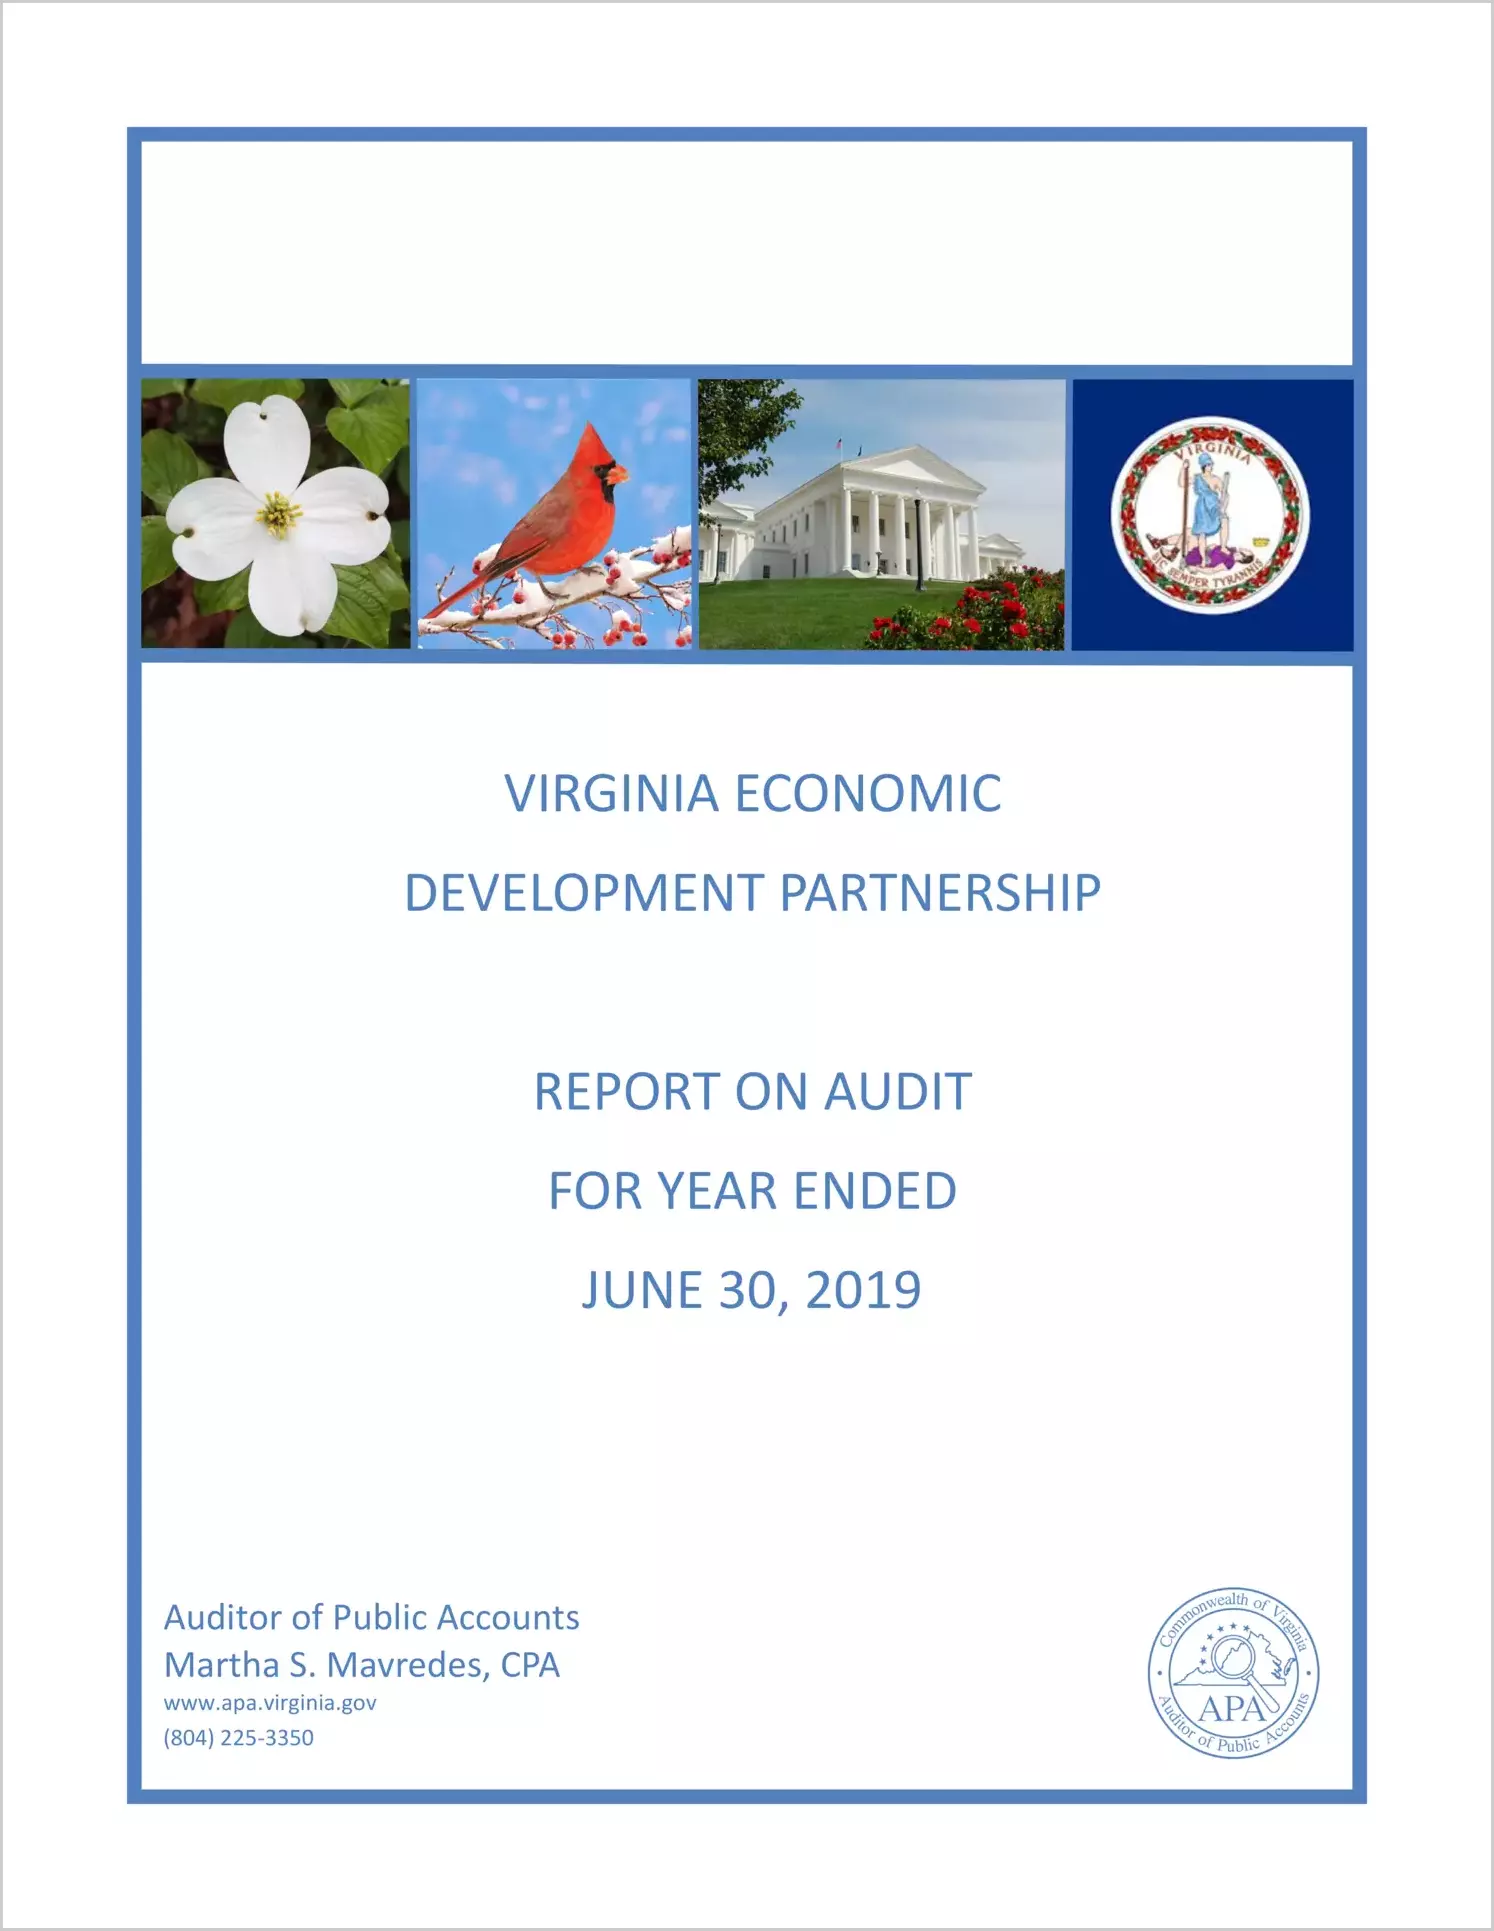 Virginia Economic Development Partnership for the year ended June 30, 2019